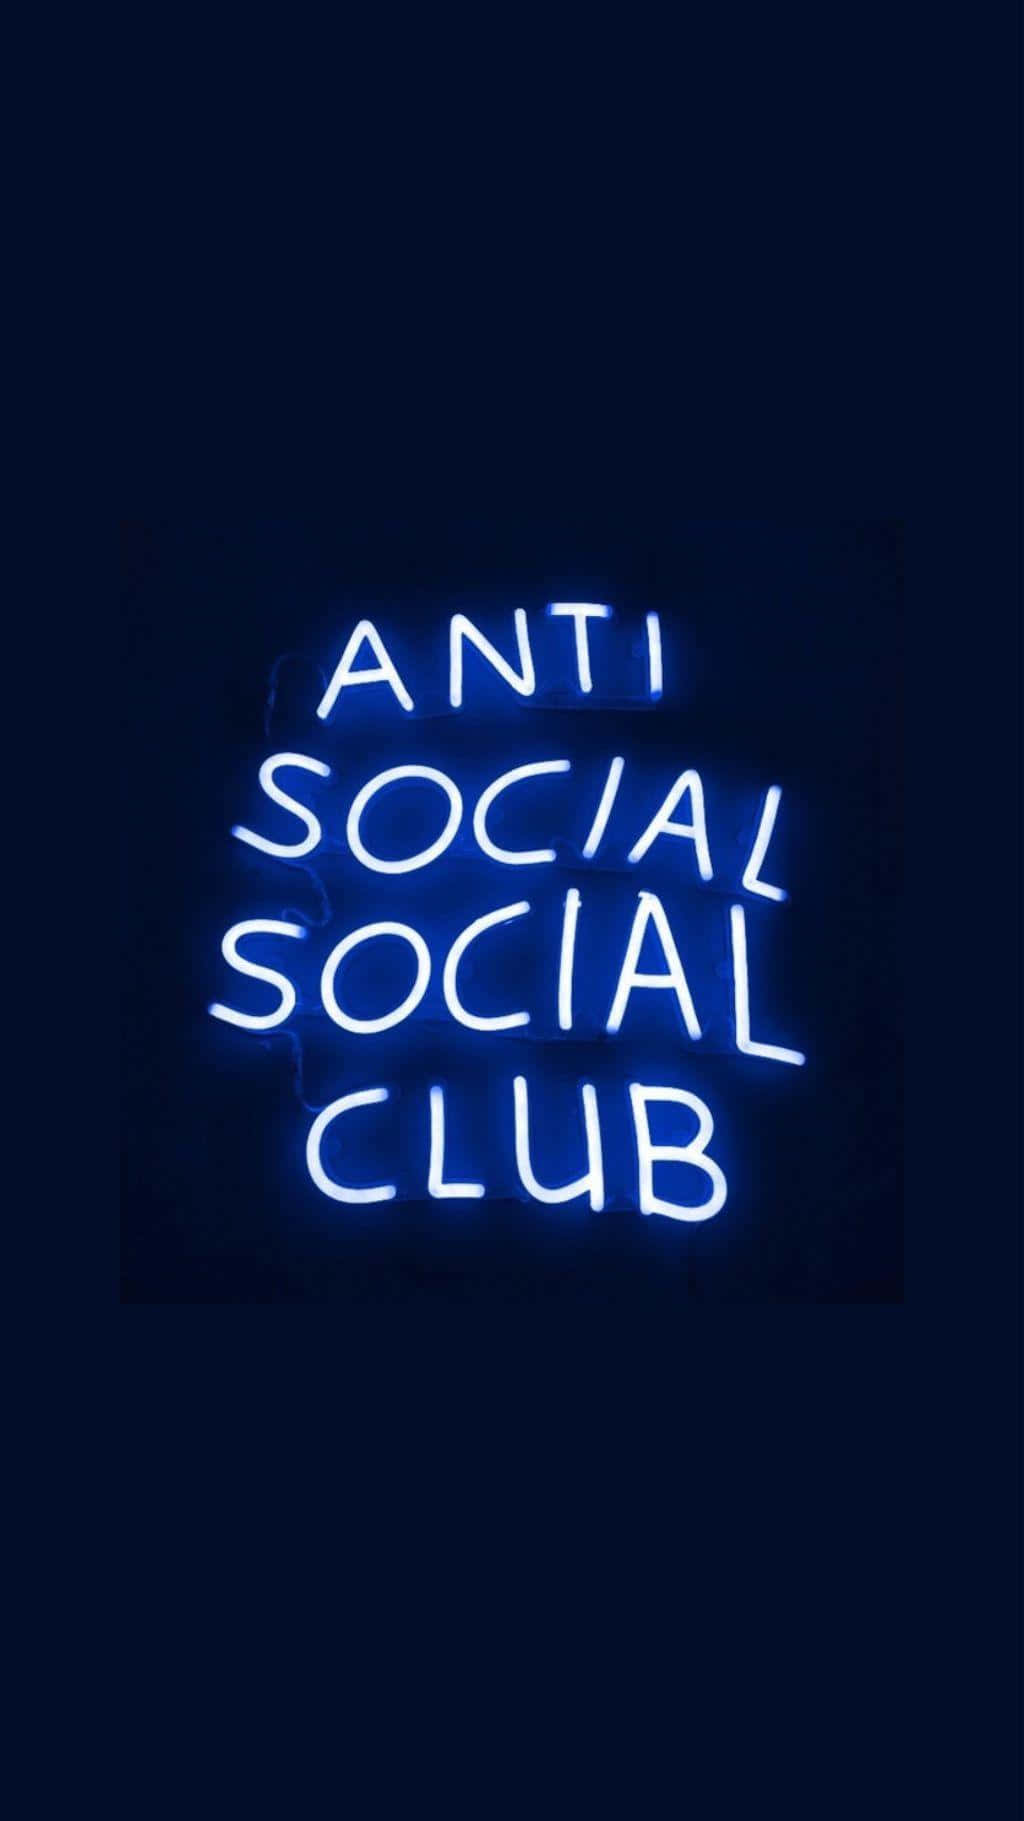 Anti Social Club Iphone Neon Blue Signage Wallpaper